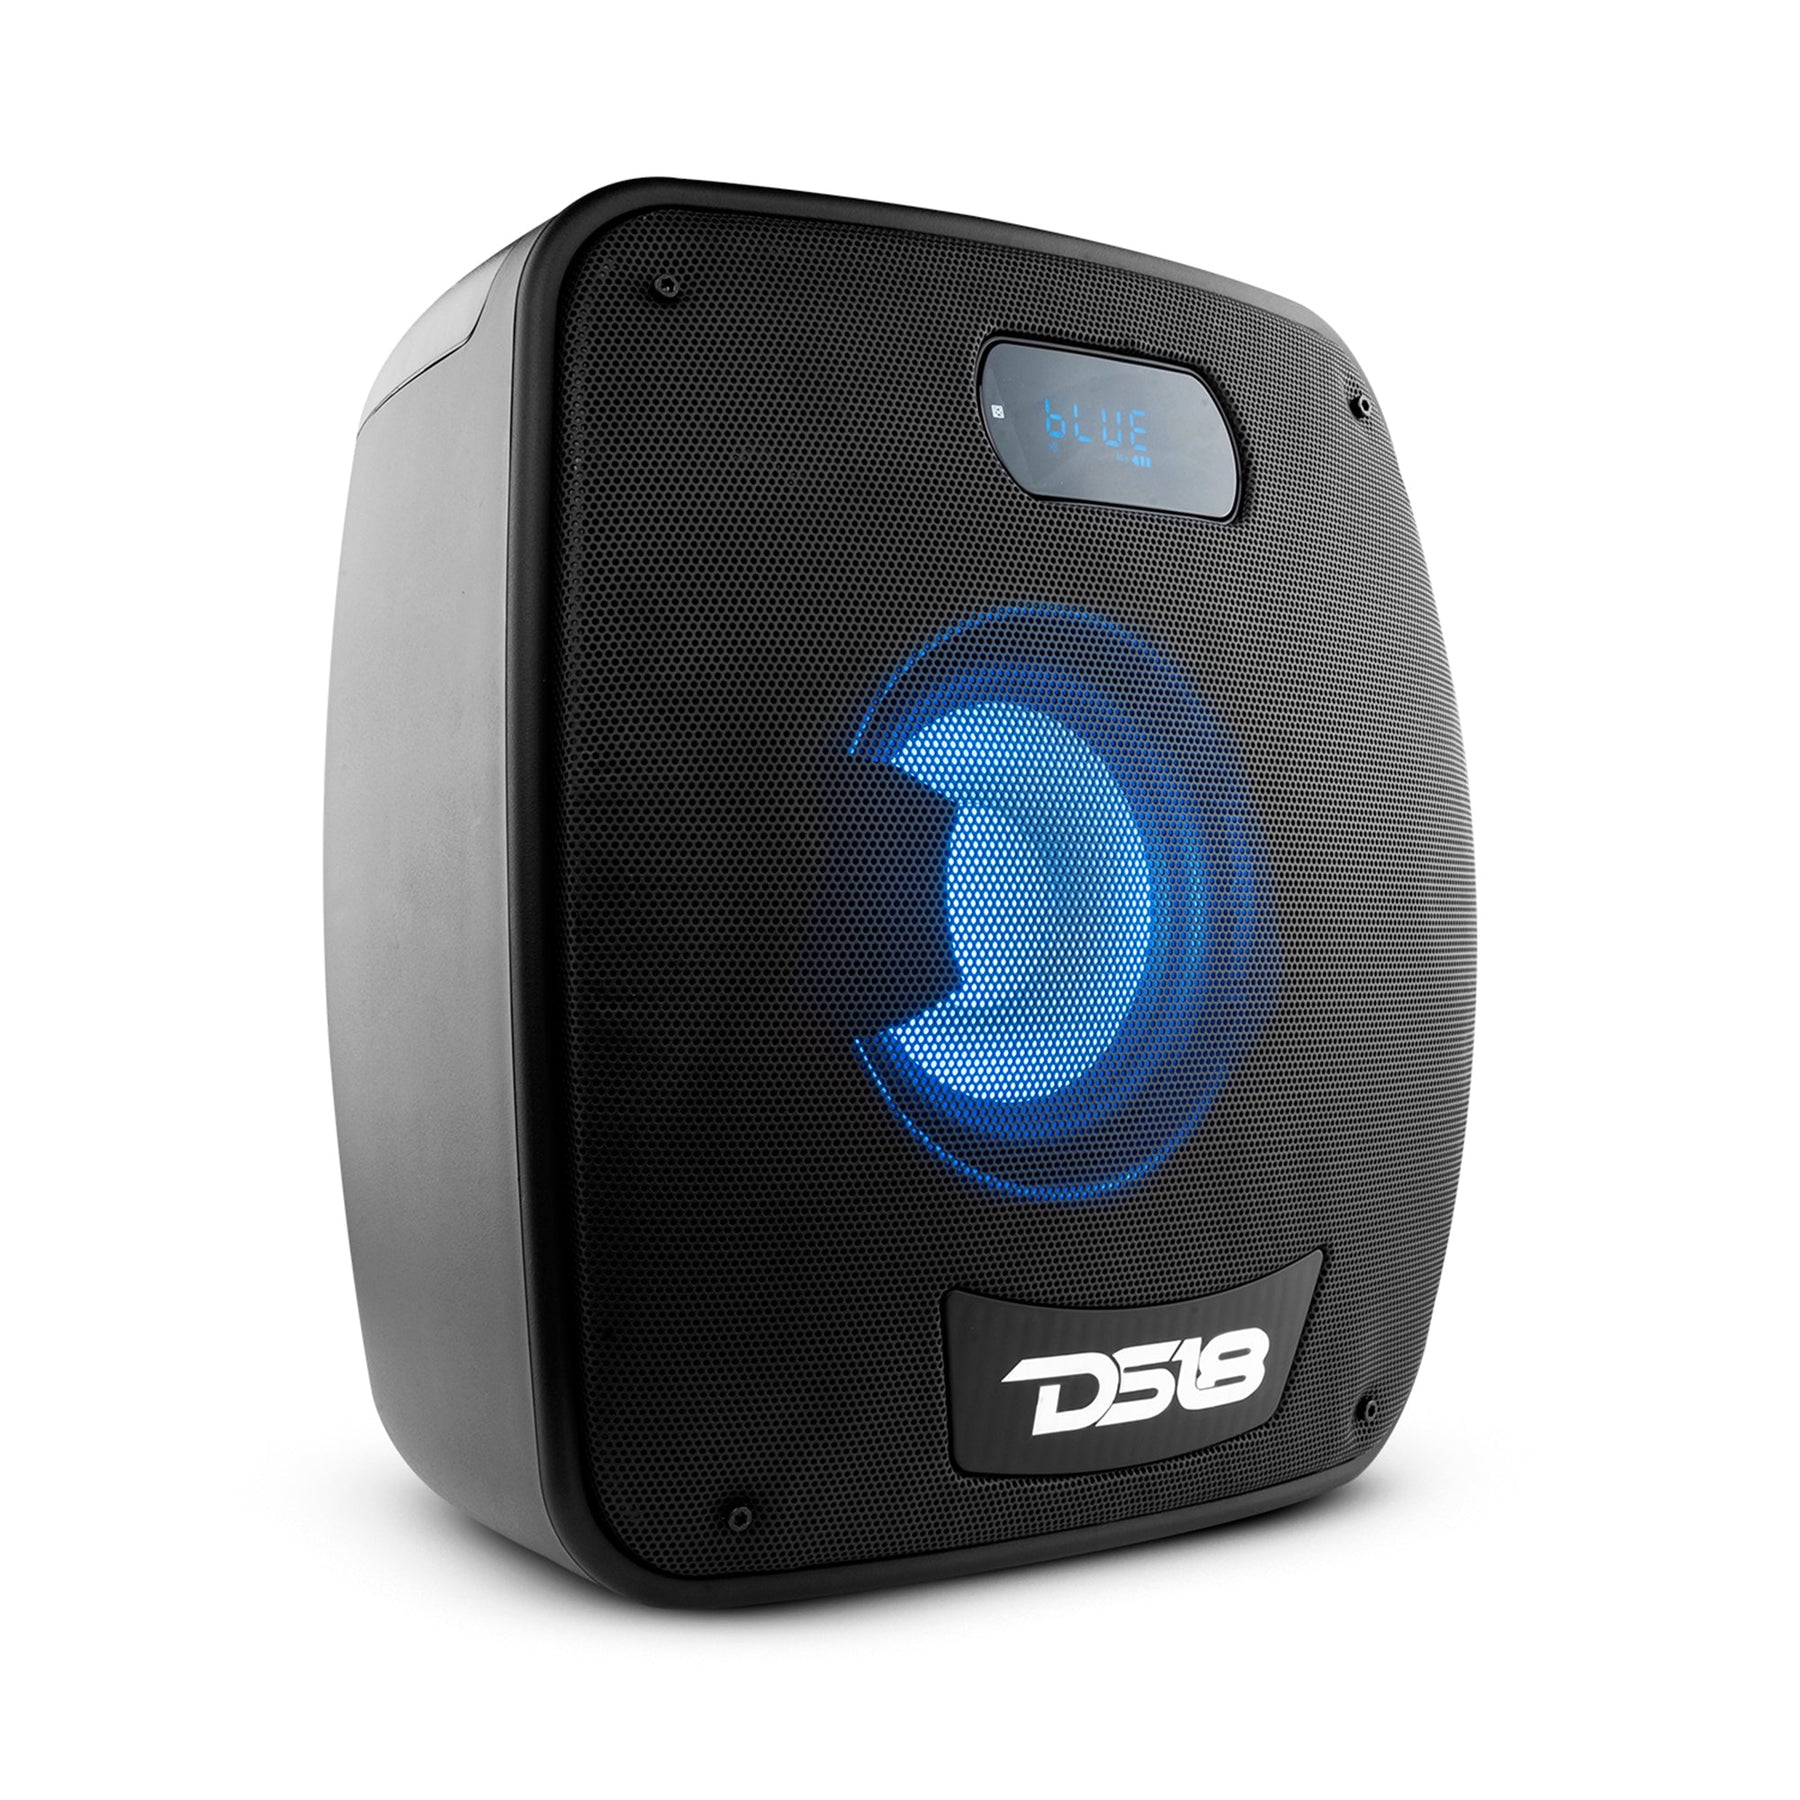 Shop Sub Woofer Super Bass 5 Inch Wireless Bluetooth Speaker with